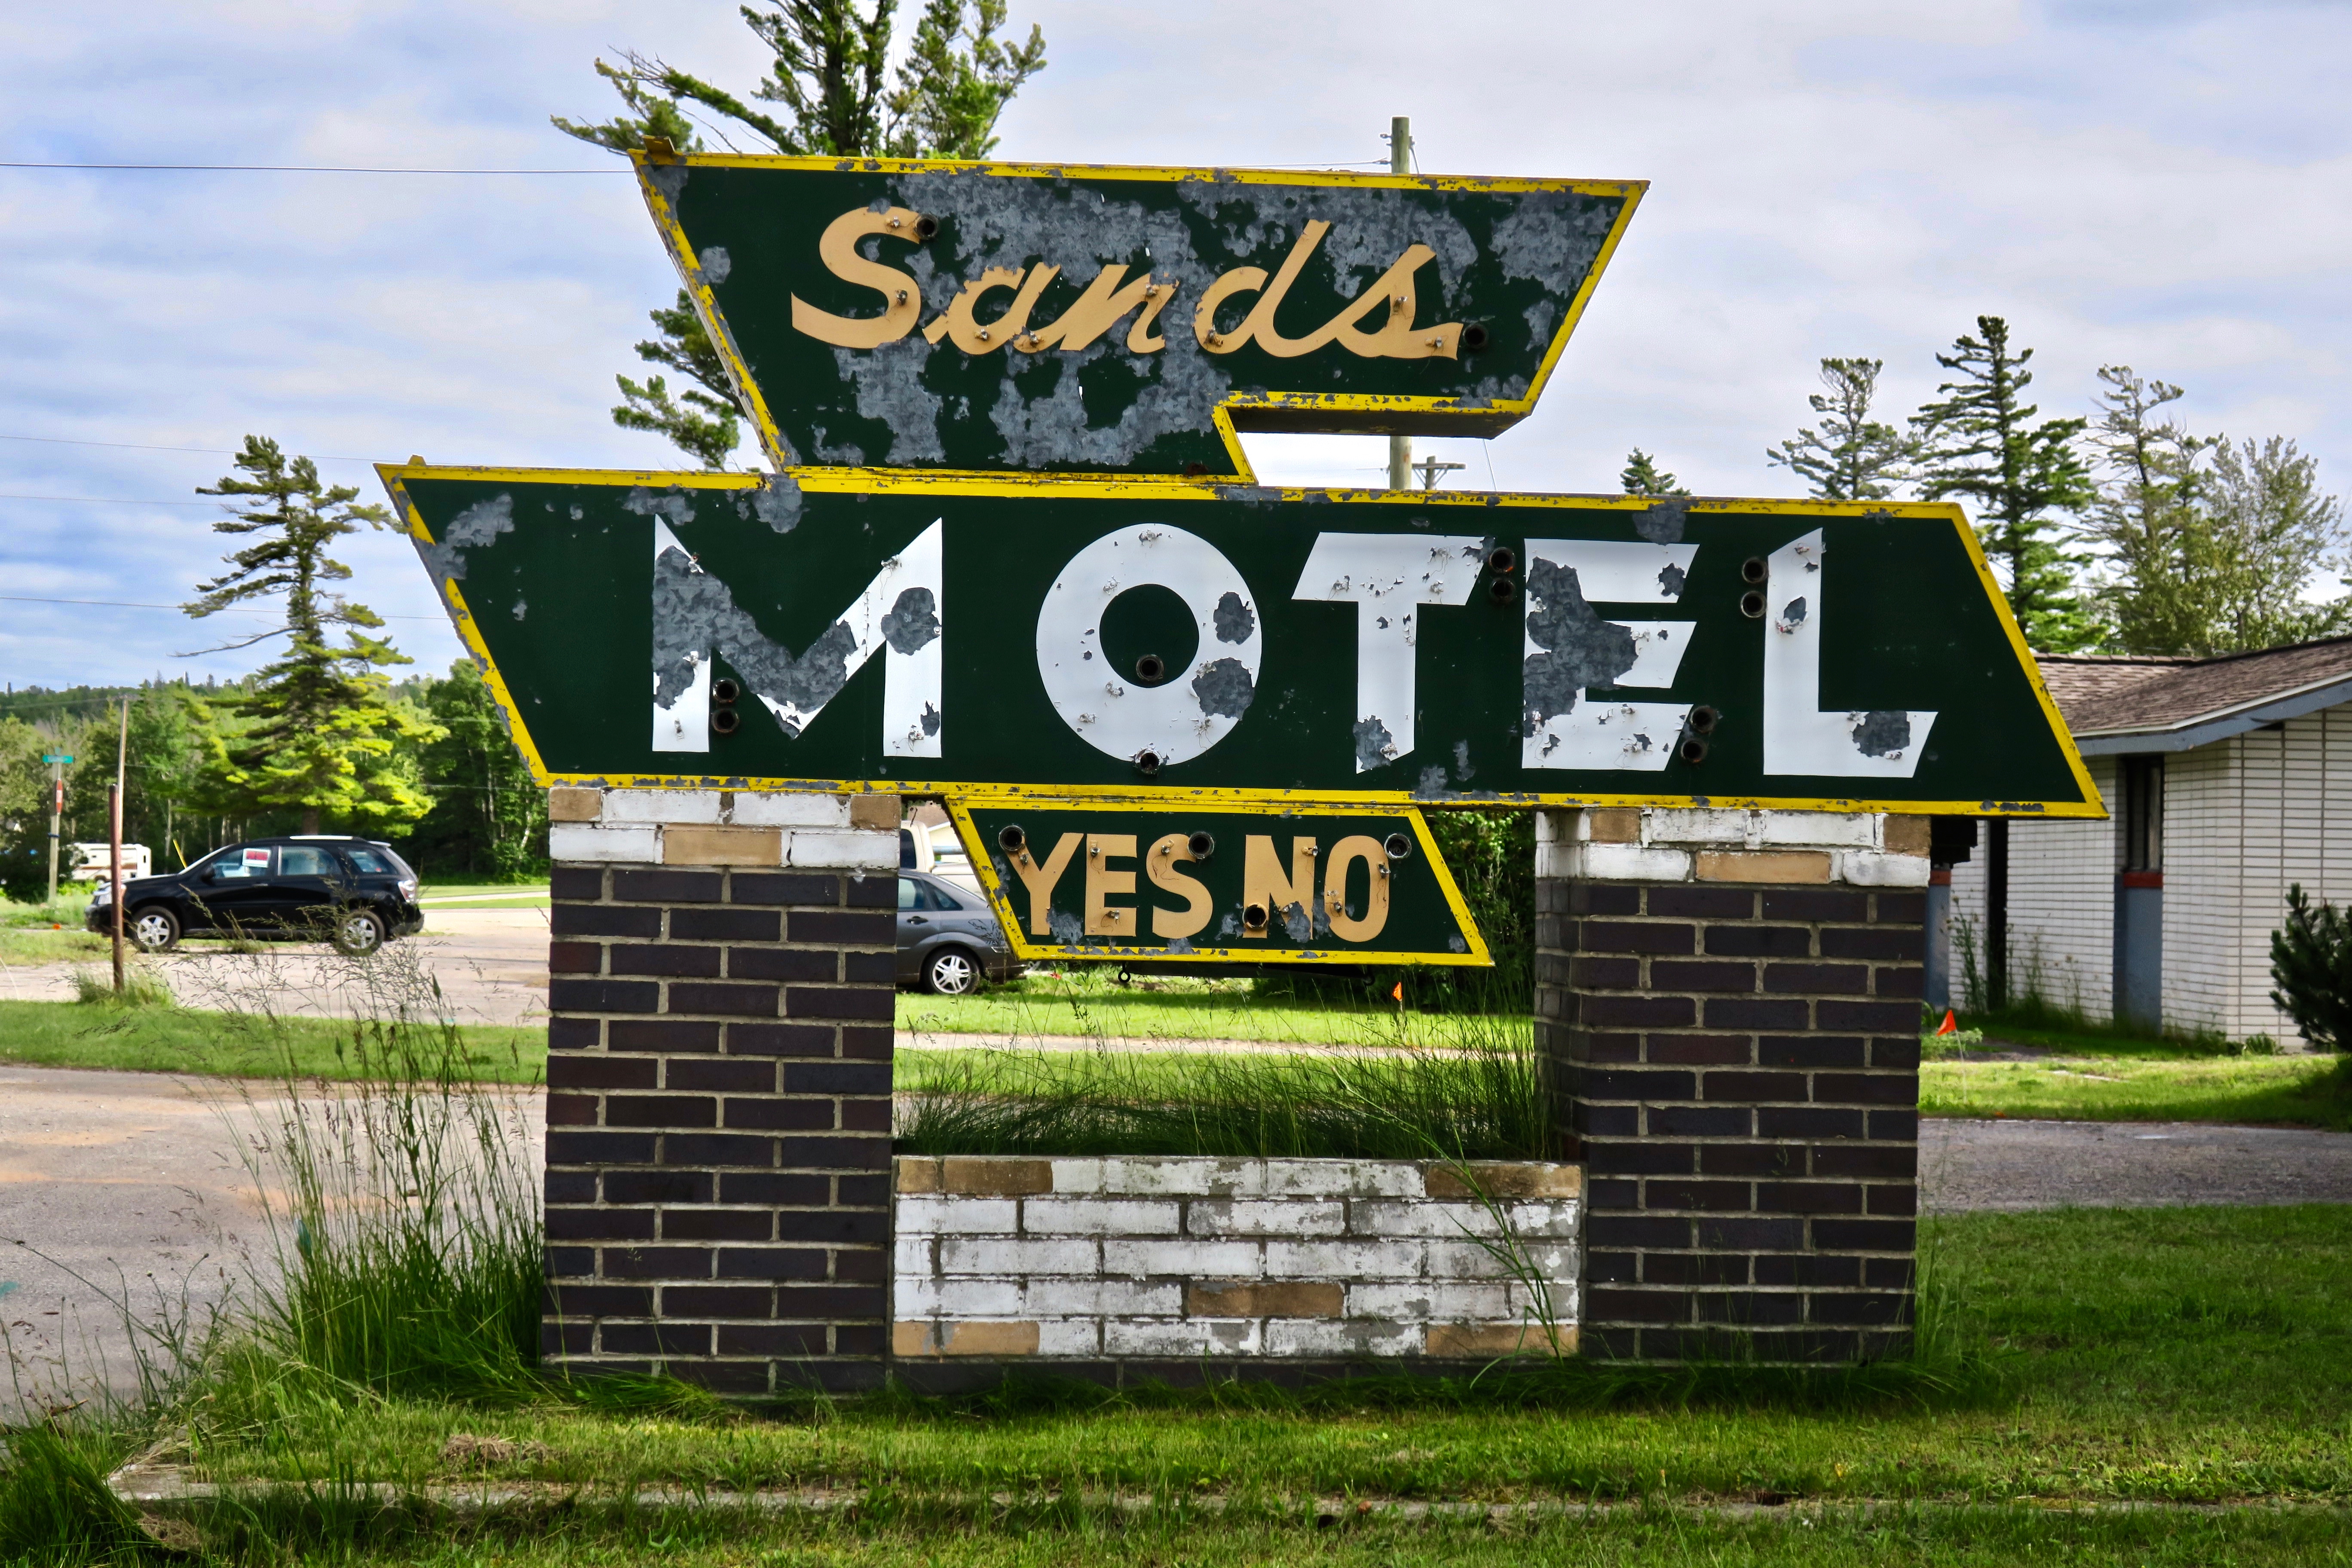 Sands Motel - Saint Ignace, Michigan U.S.A. - July 1, 2017